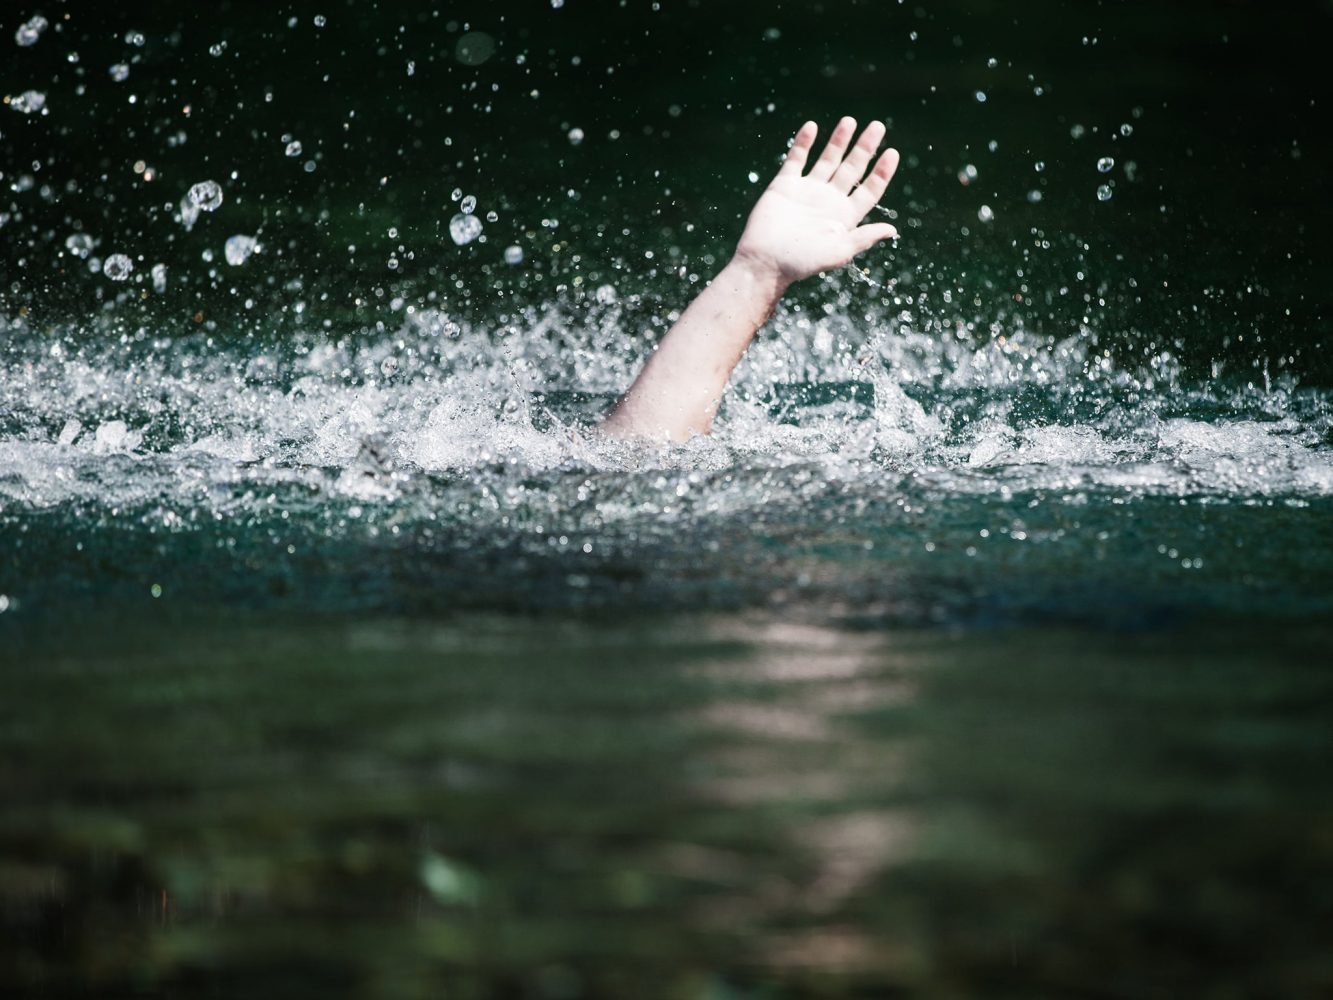 Four minor girls drown in Brahmani river